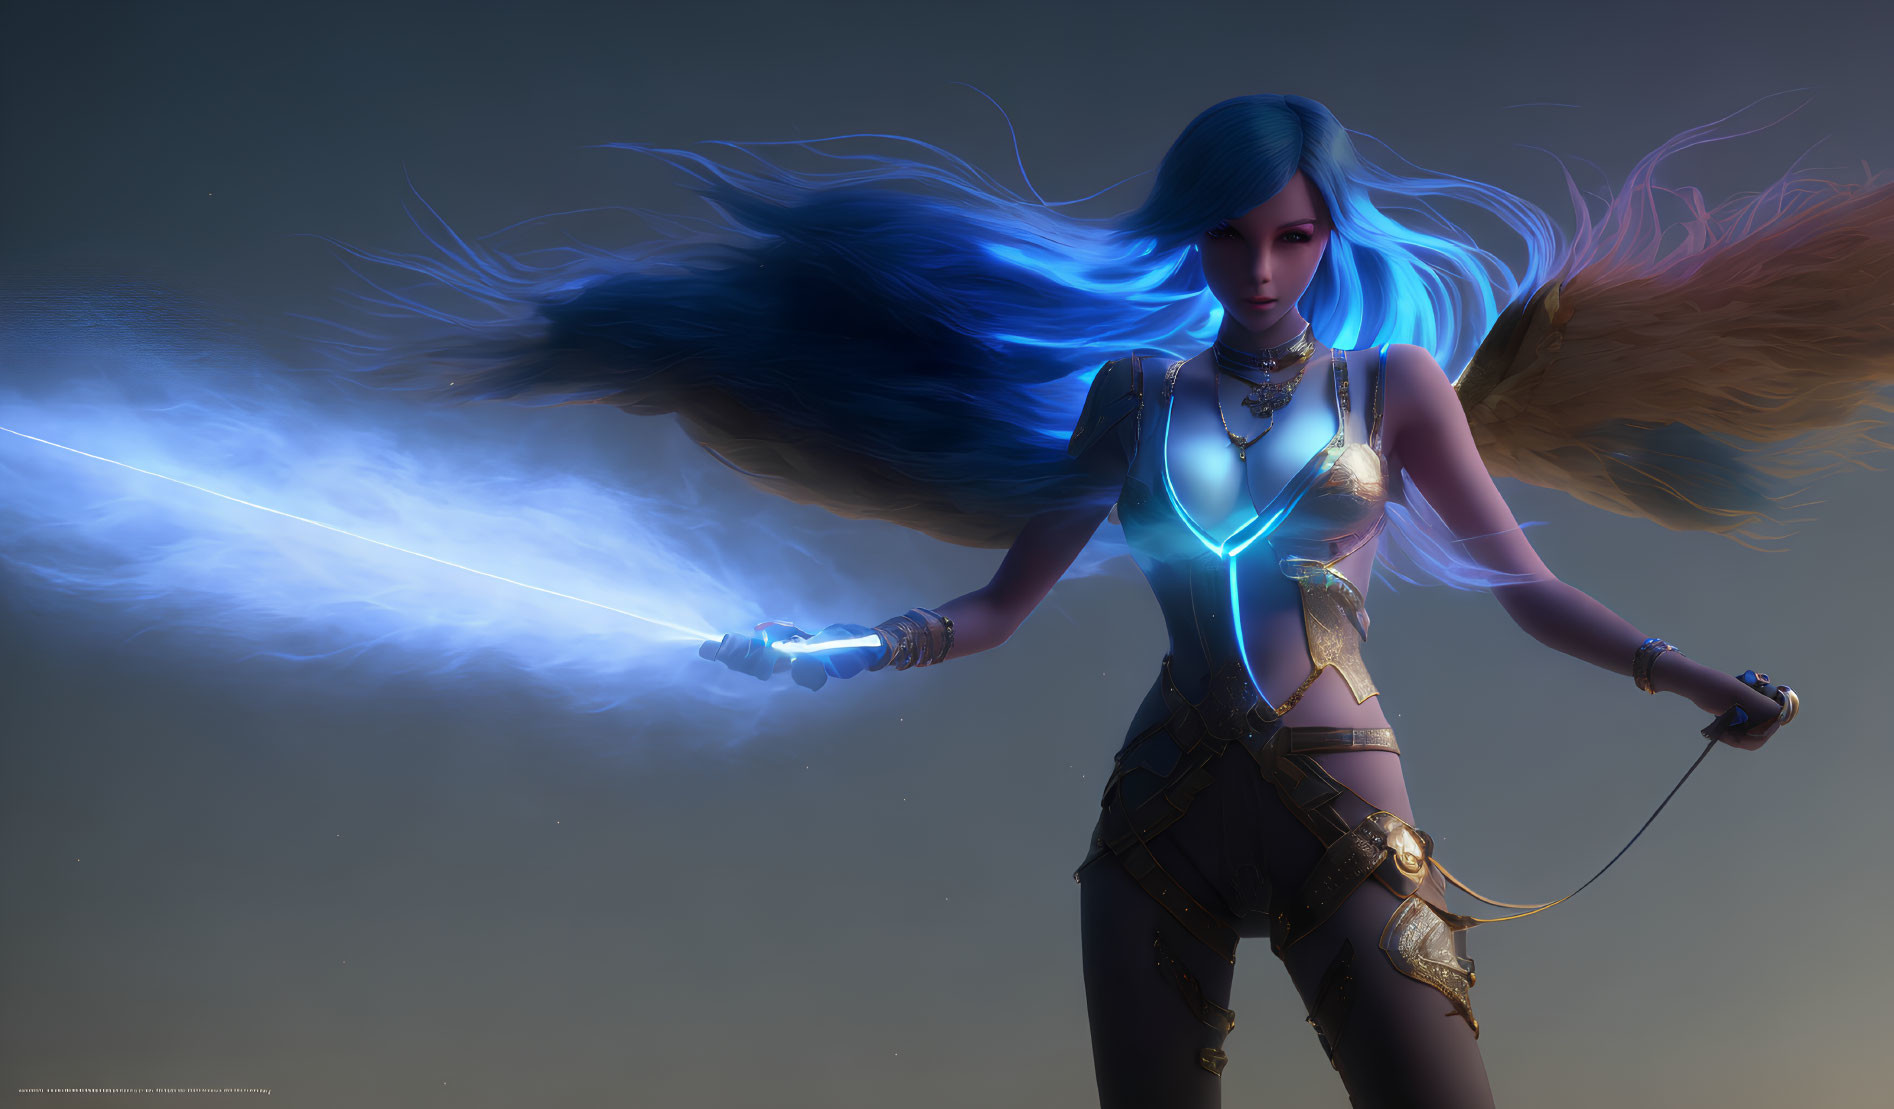 Fantasy digital art of female warrior with blue hair and luminous sword